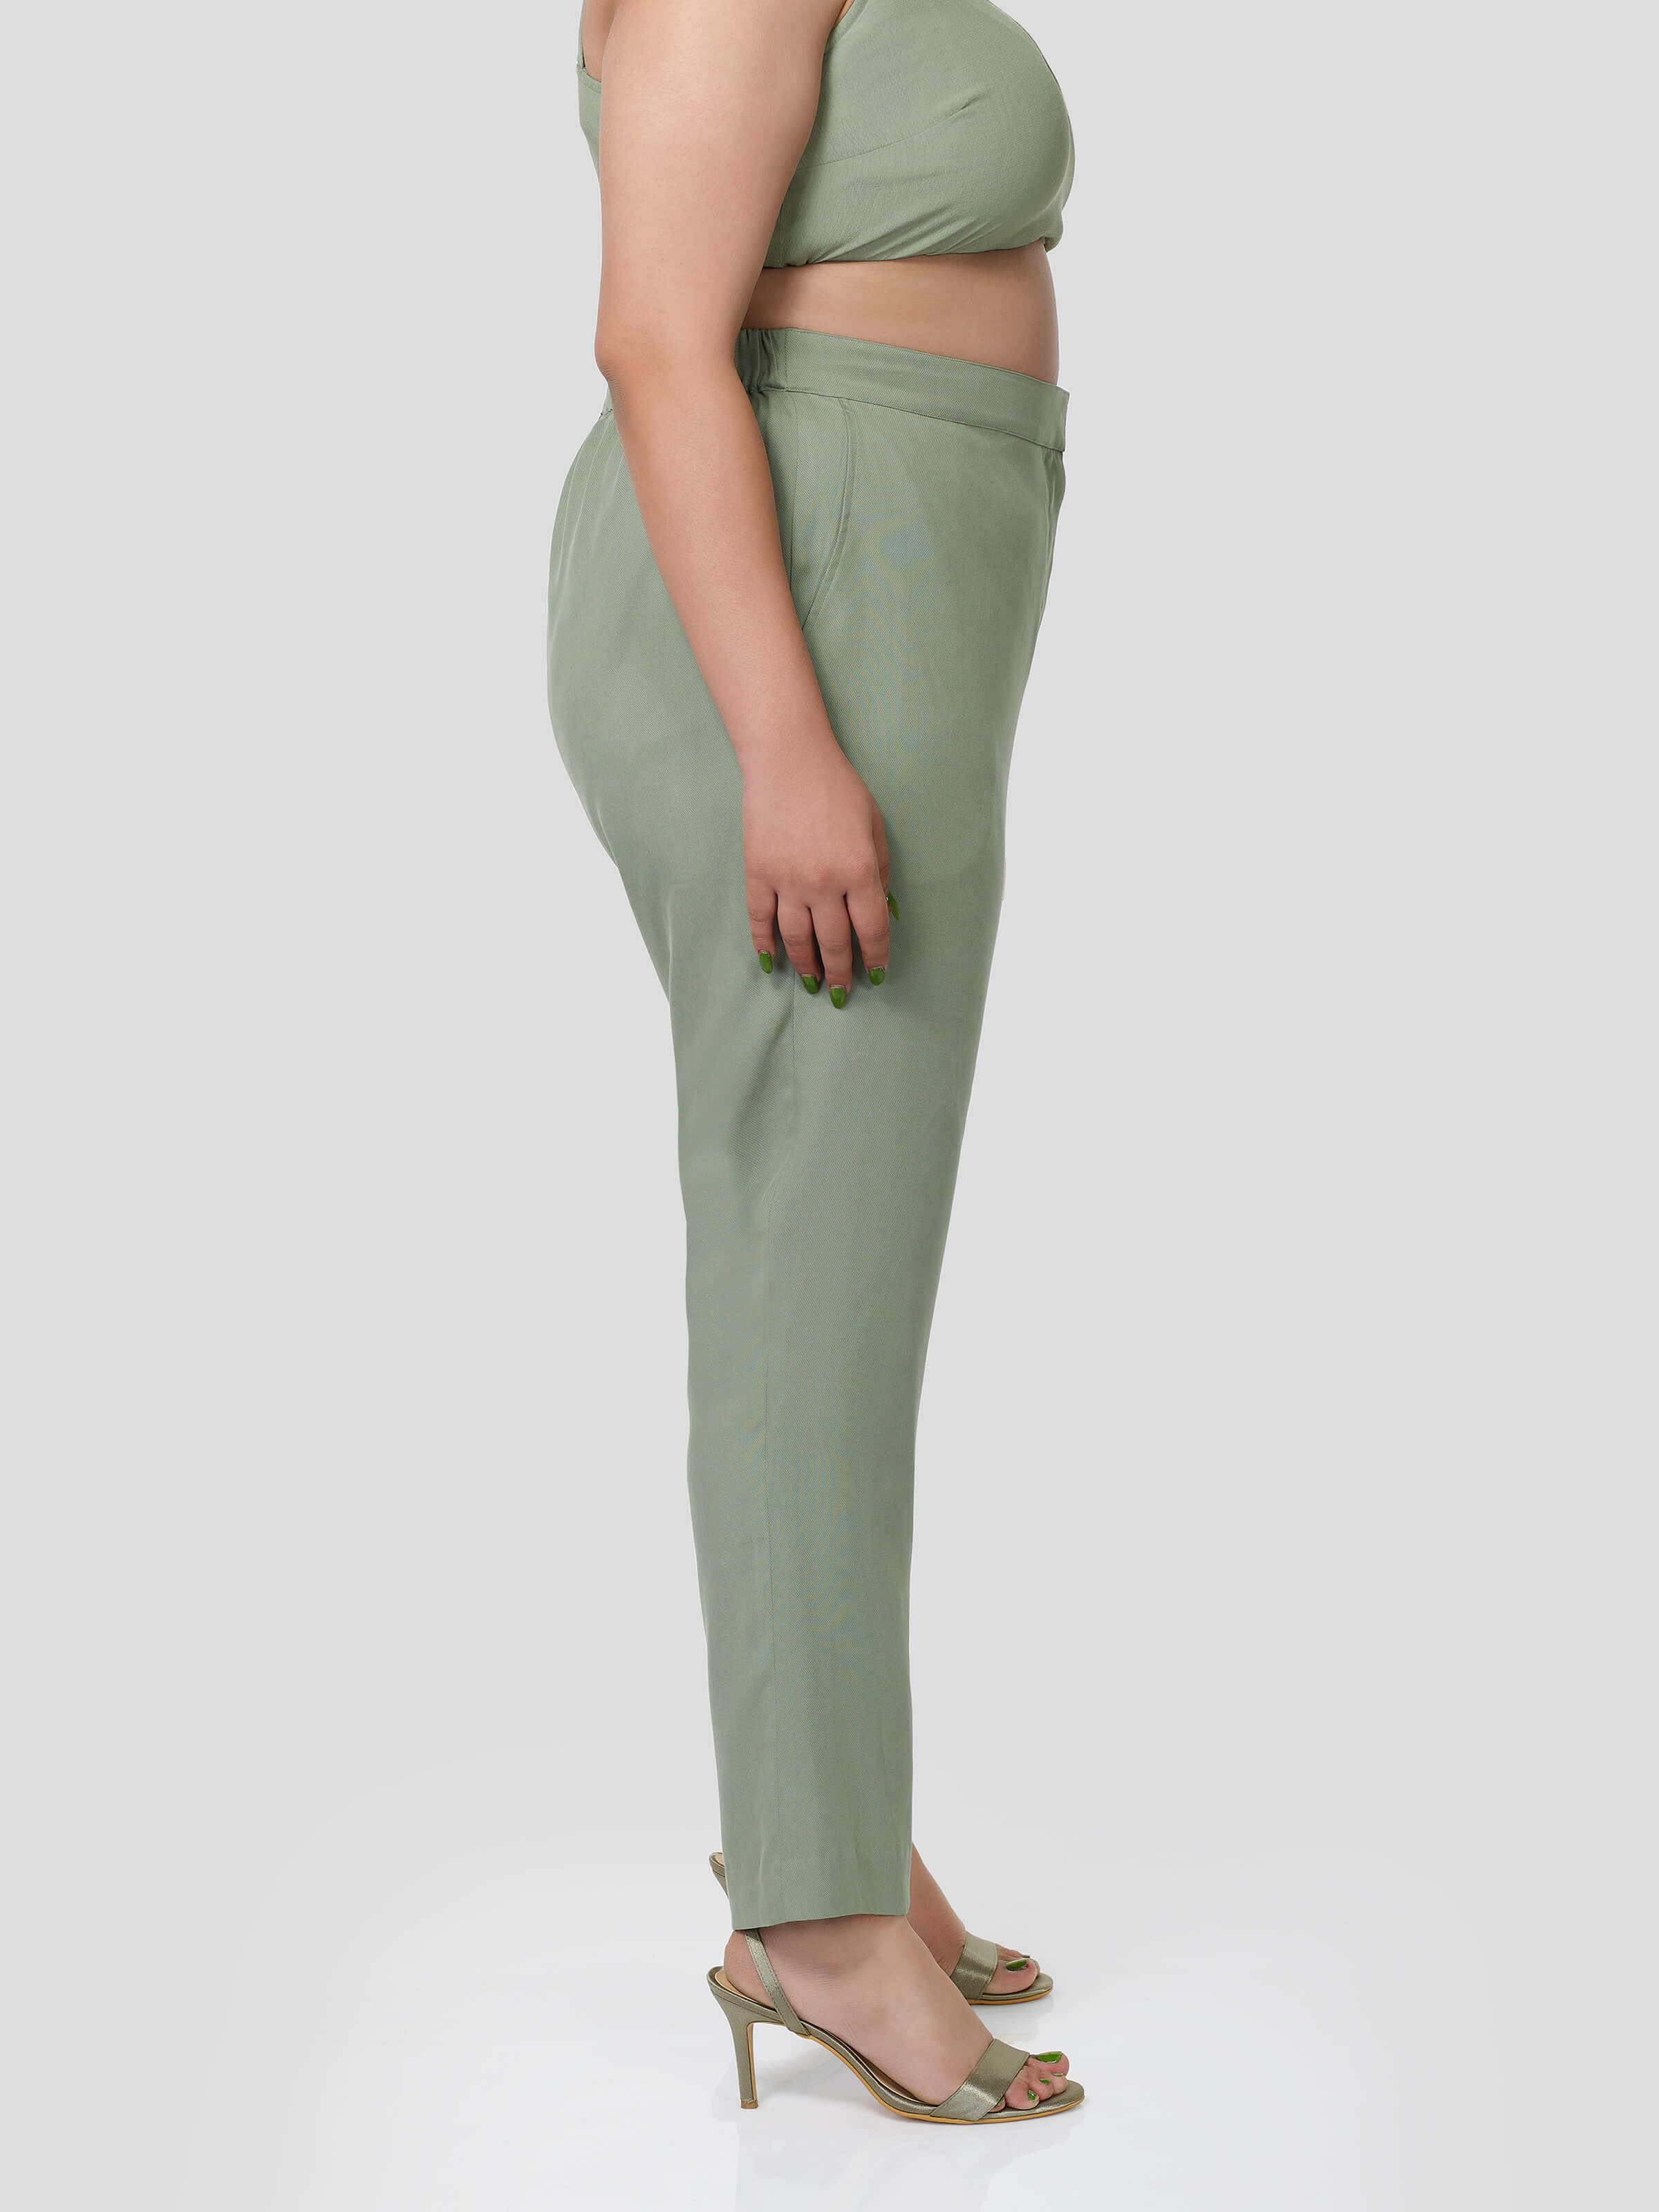 Green Crop Top with Narrow Pants - Zest Mélange 